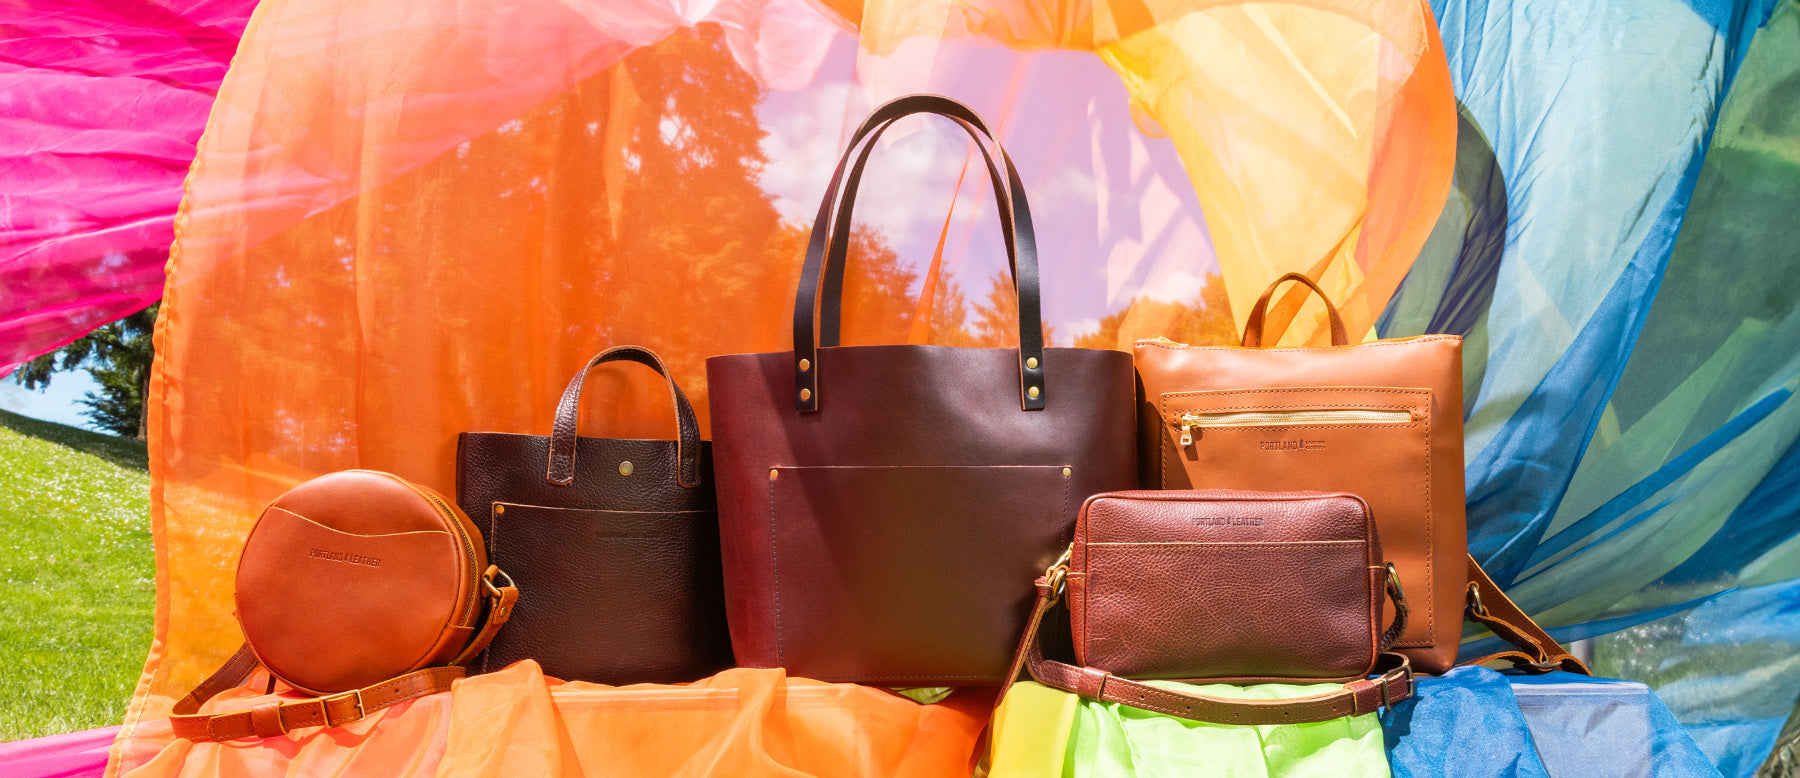 Shoulder Bags for Women, Leather Purses Cute Hobo Bag Tote Handbag women's  cross | eBay